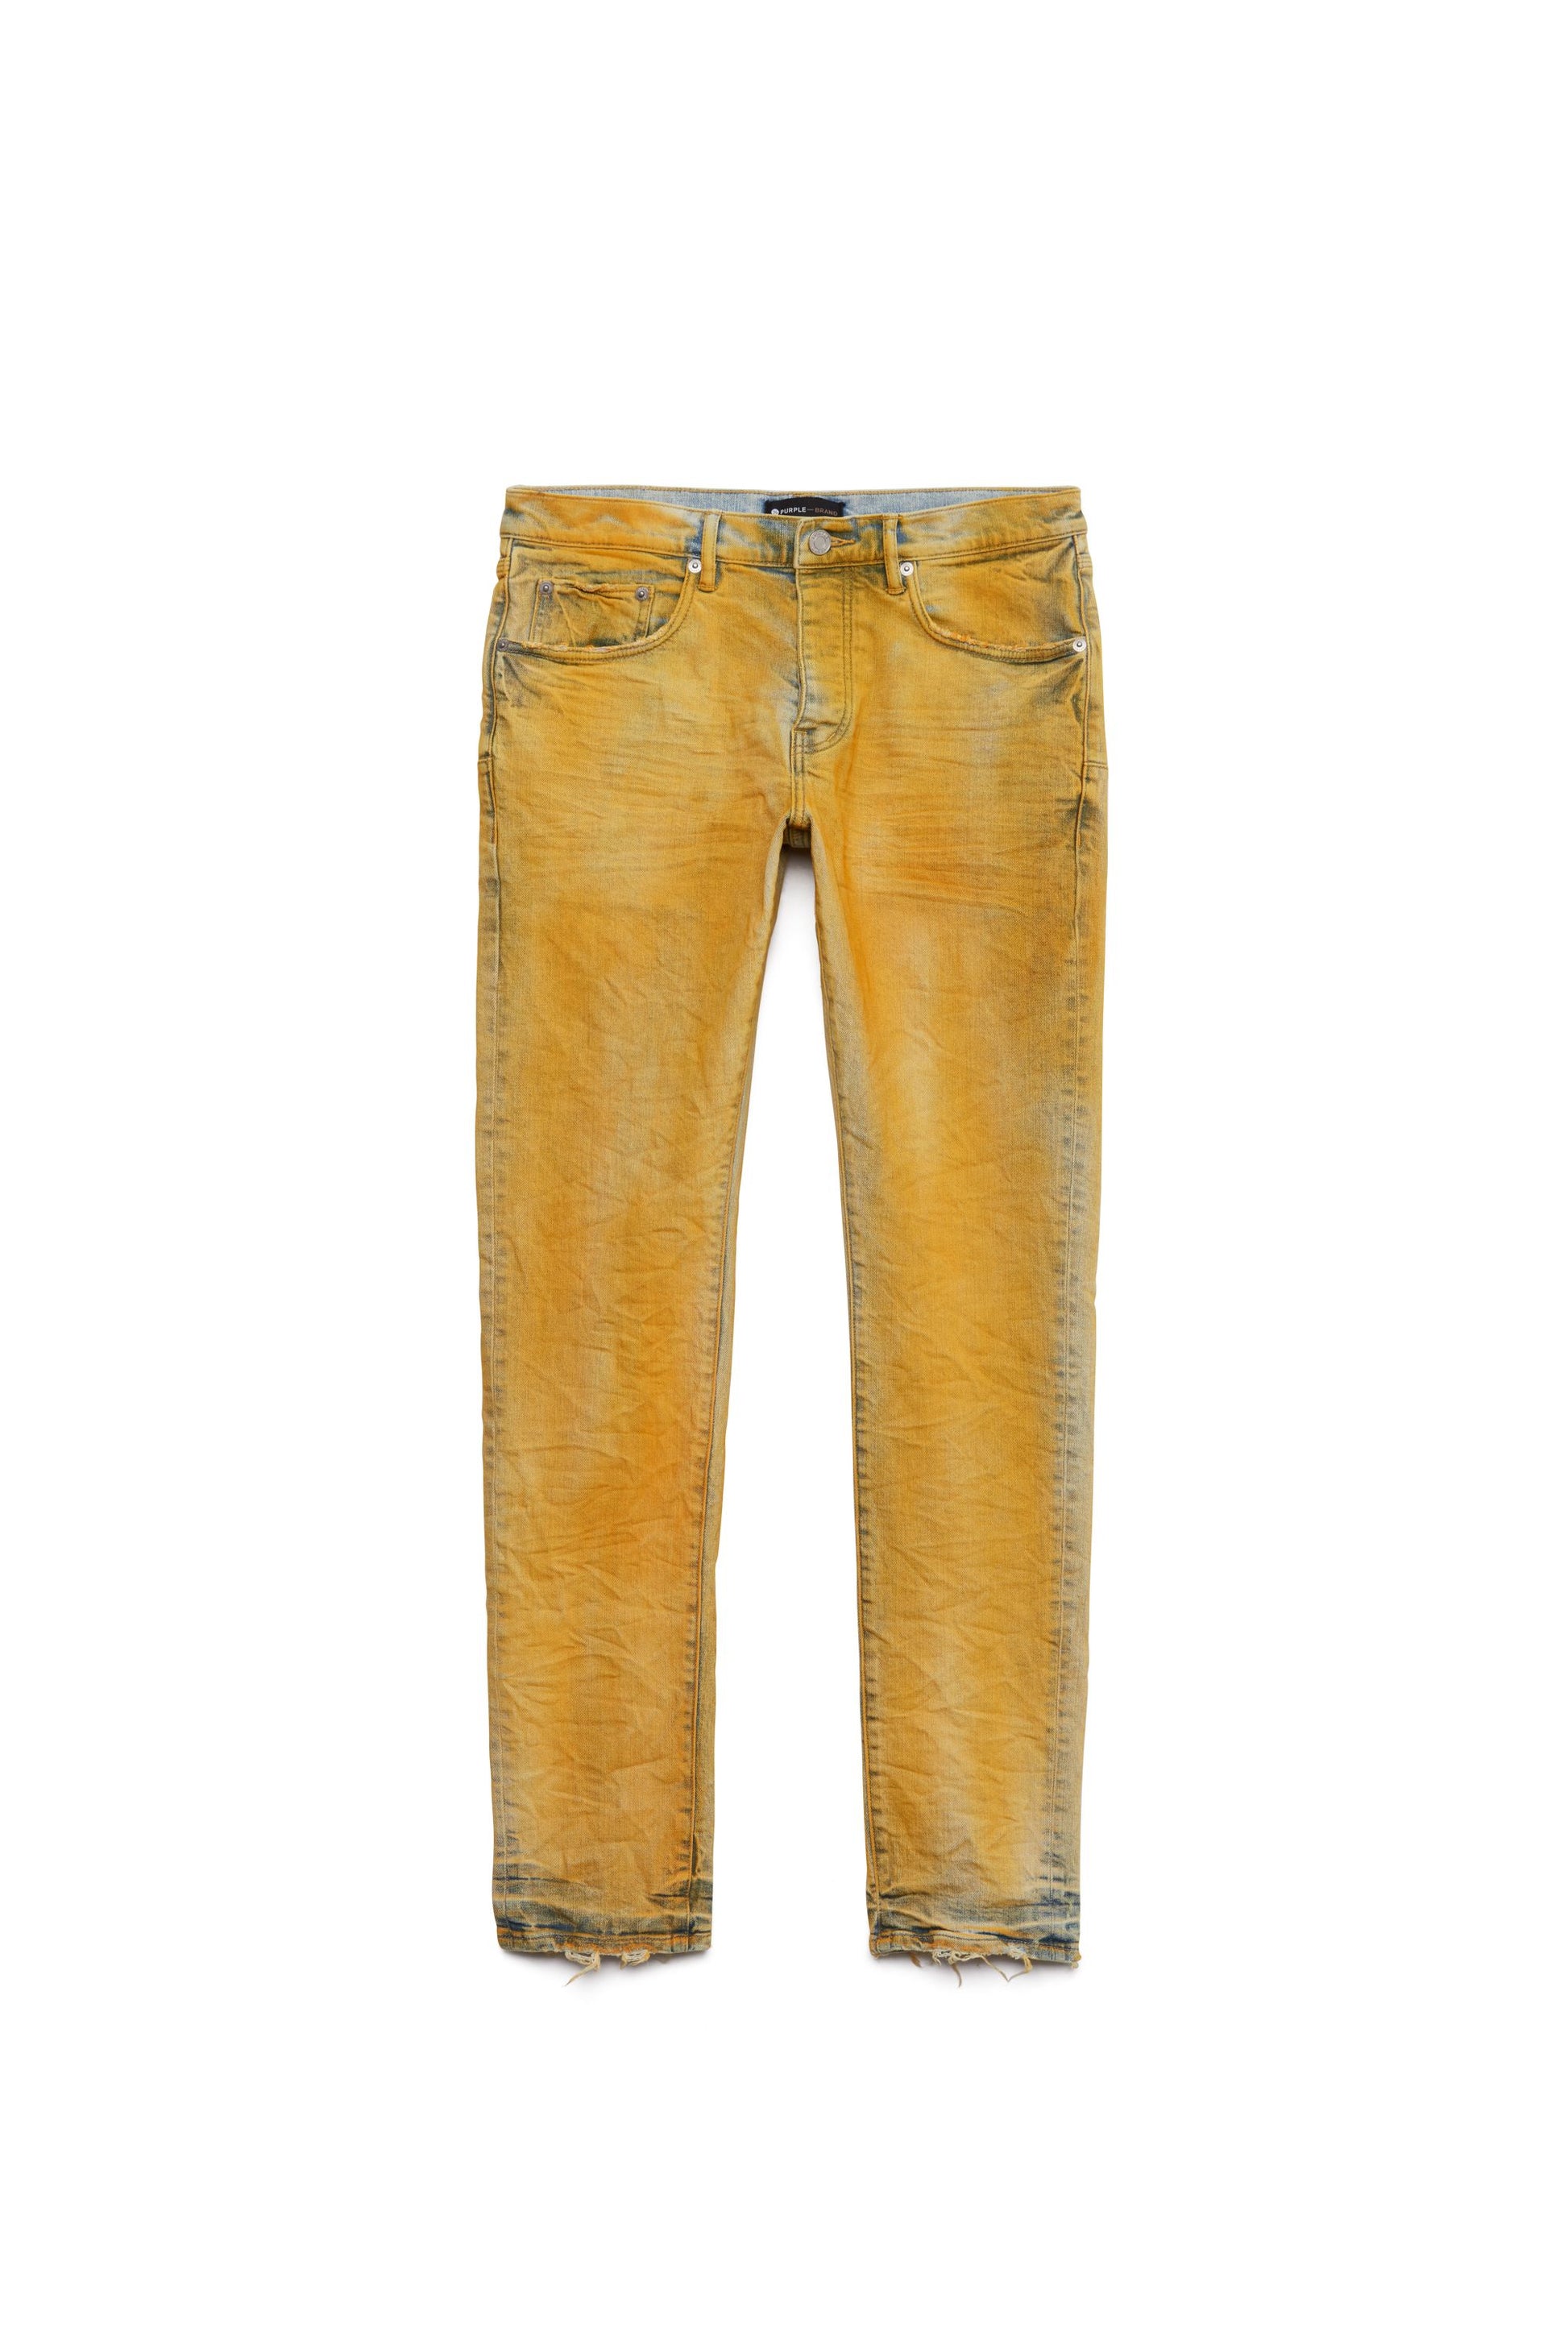 PURPLE BRAND - Men's Denim Jean - Low Rise Skinny - Style No. P001 - Yellow Over Light Indigo - Front